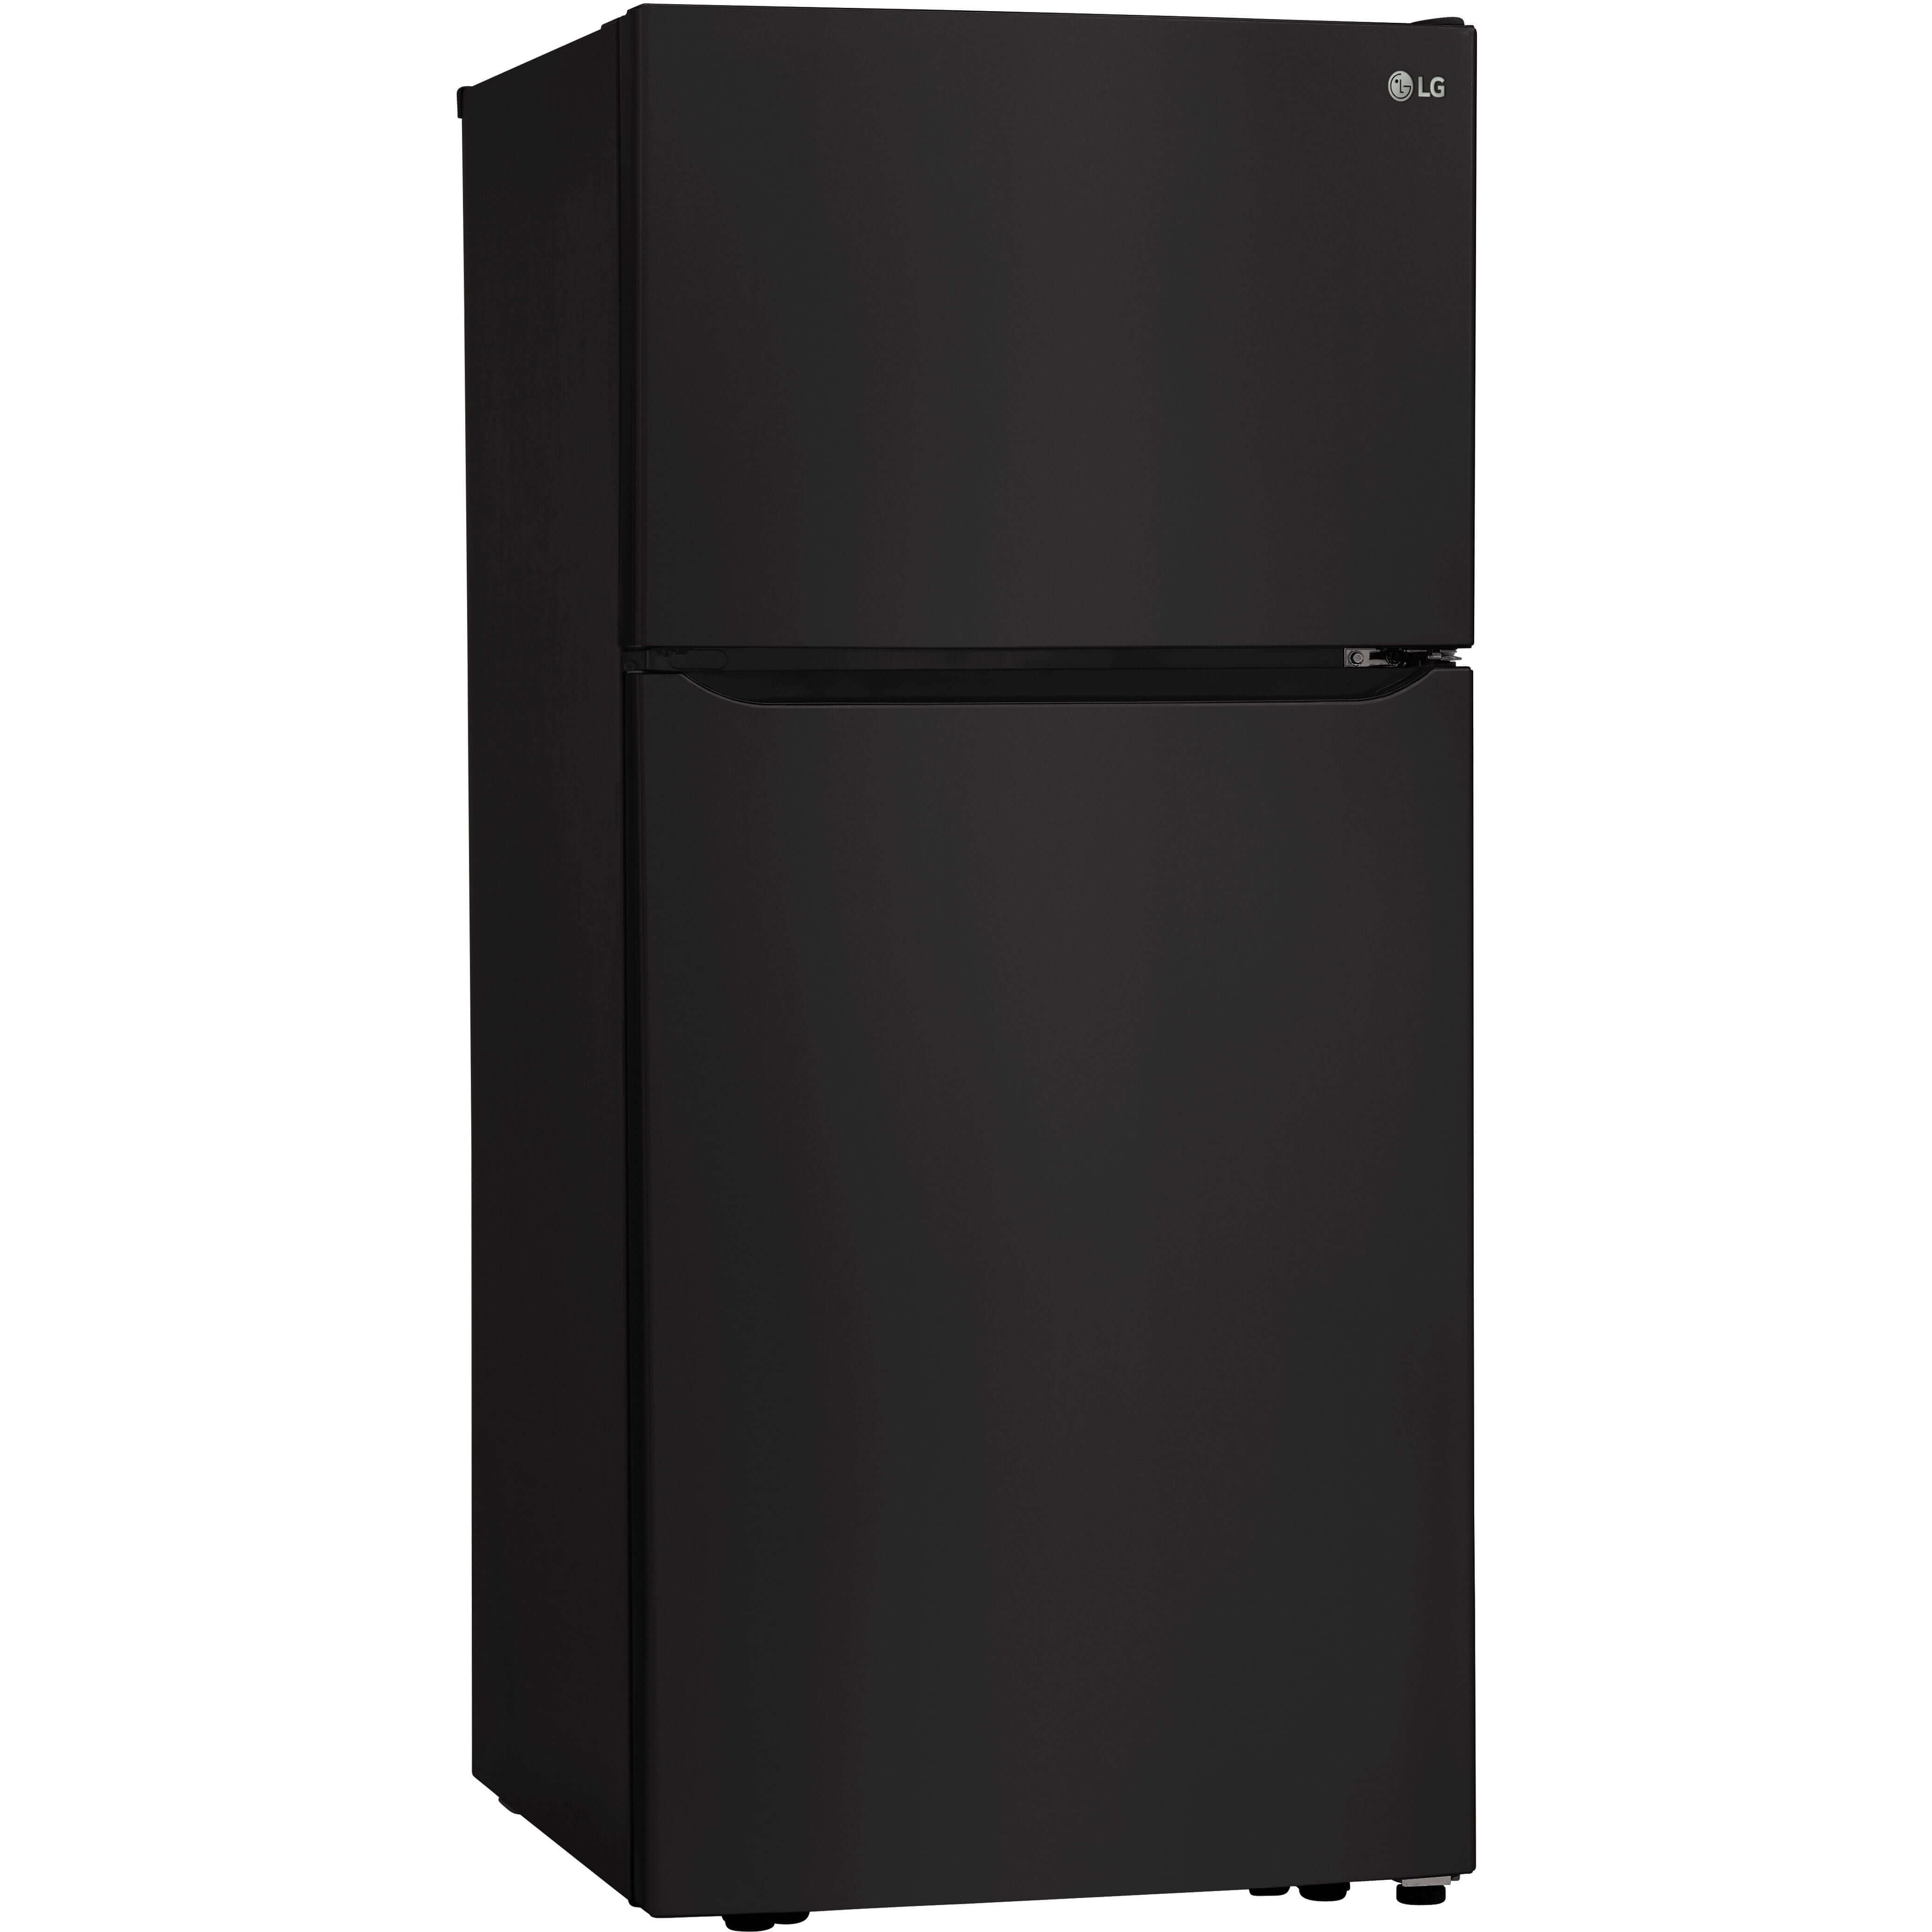 LG 30 Inch Top Freezer Refrigerator in Black 20 Cu. Ft. (LTCS20020B)